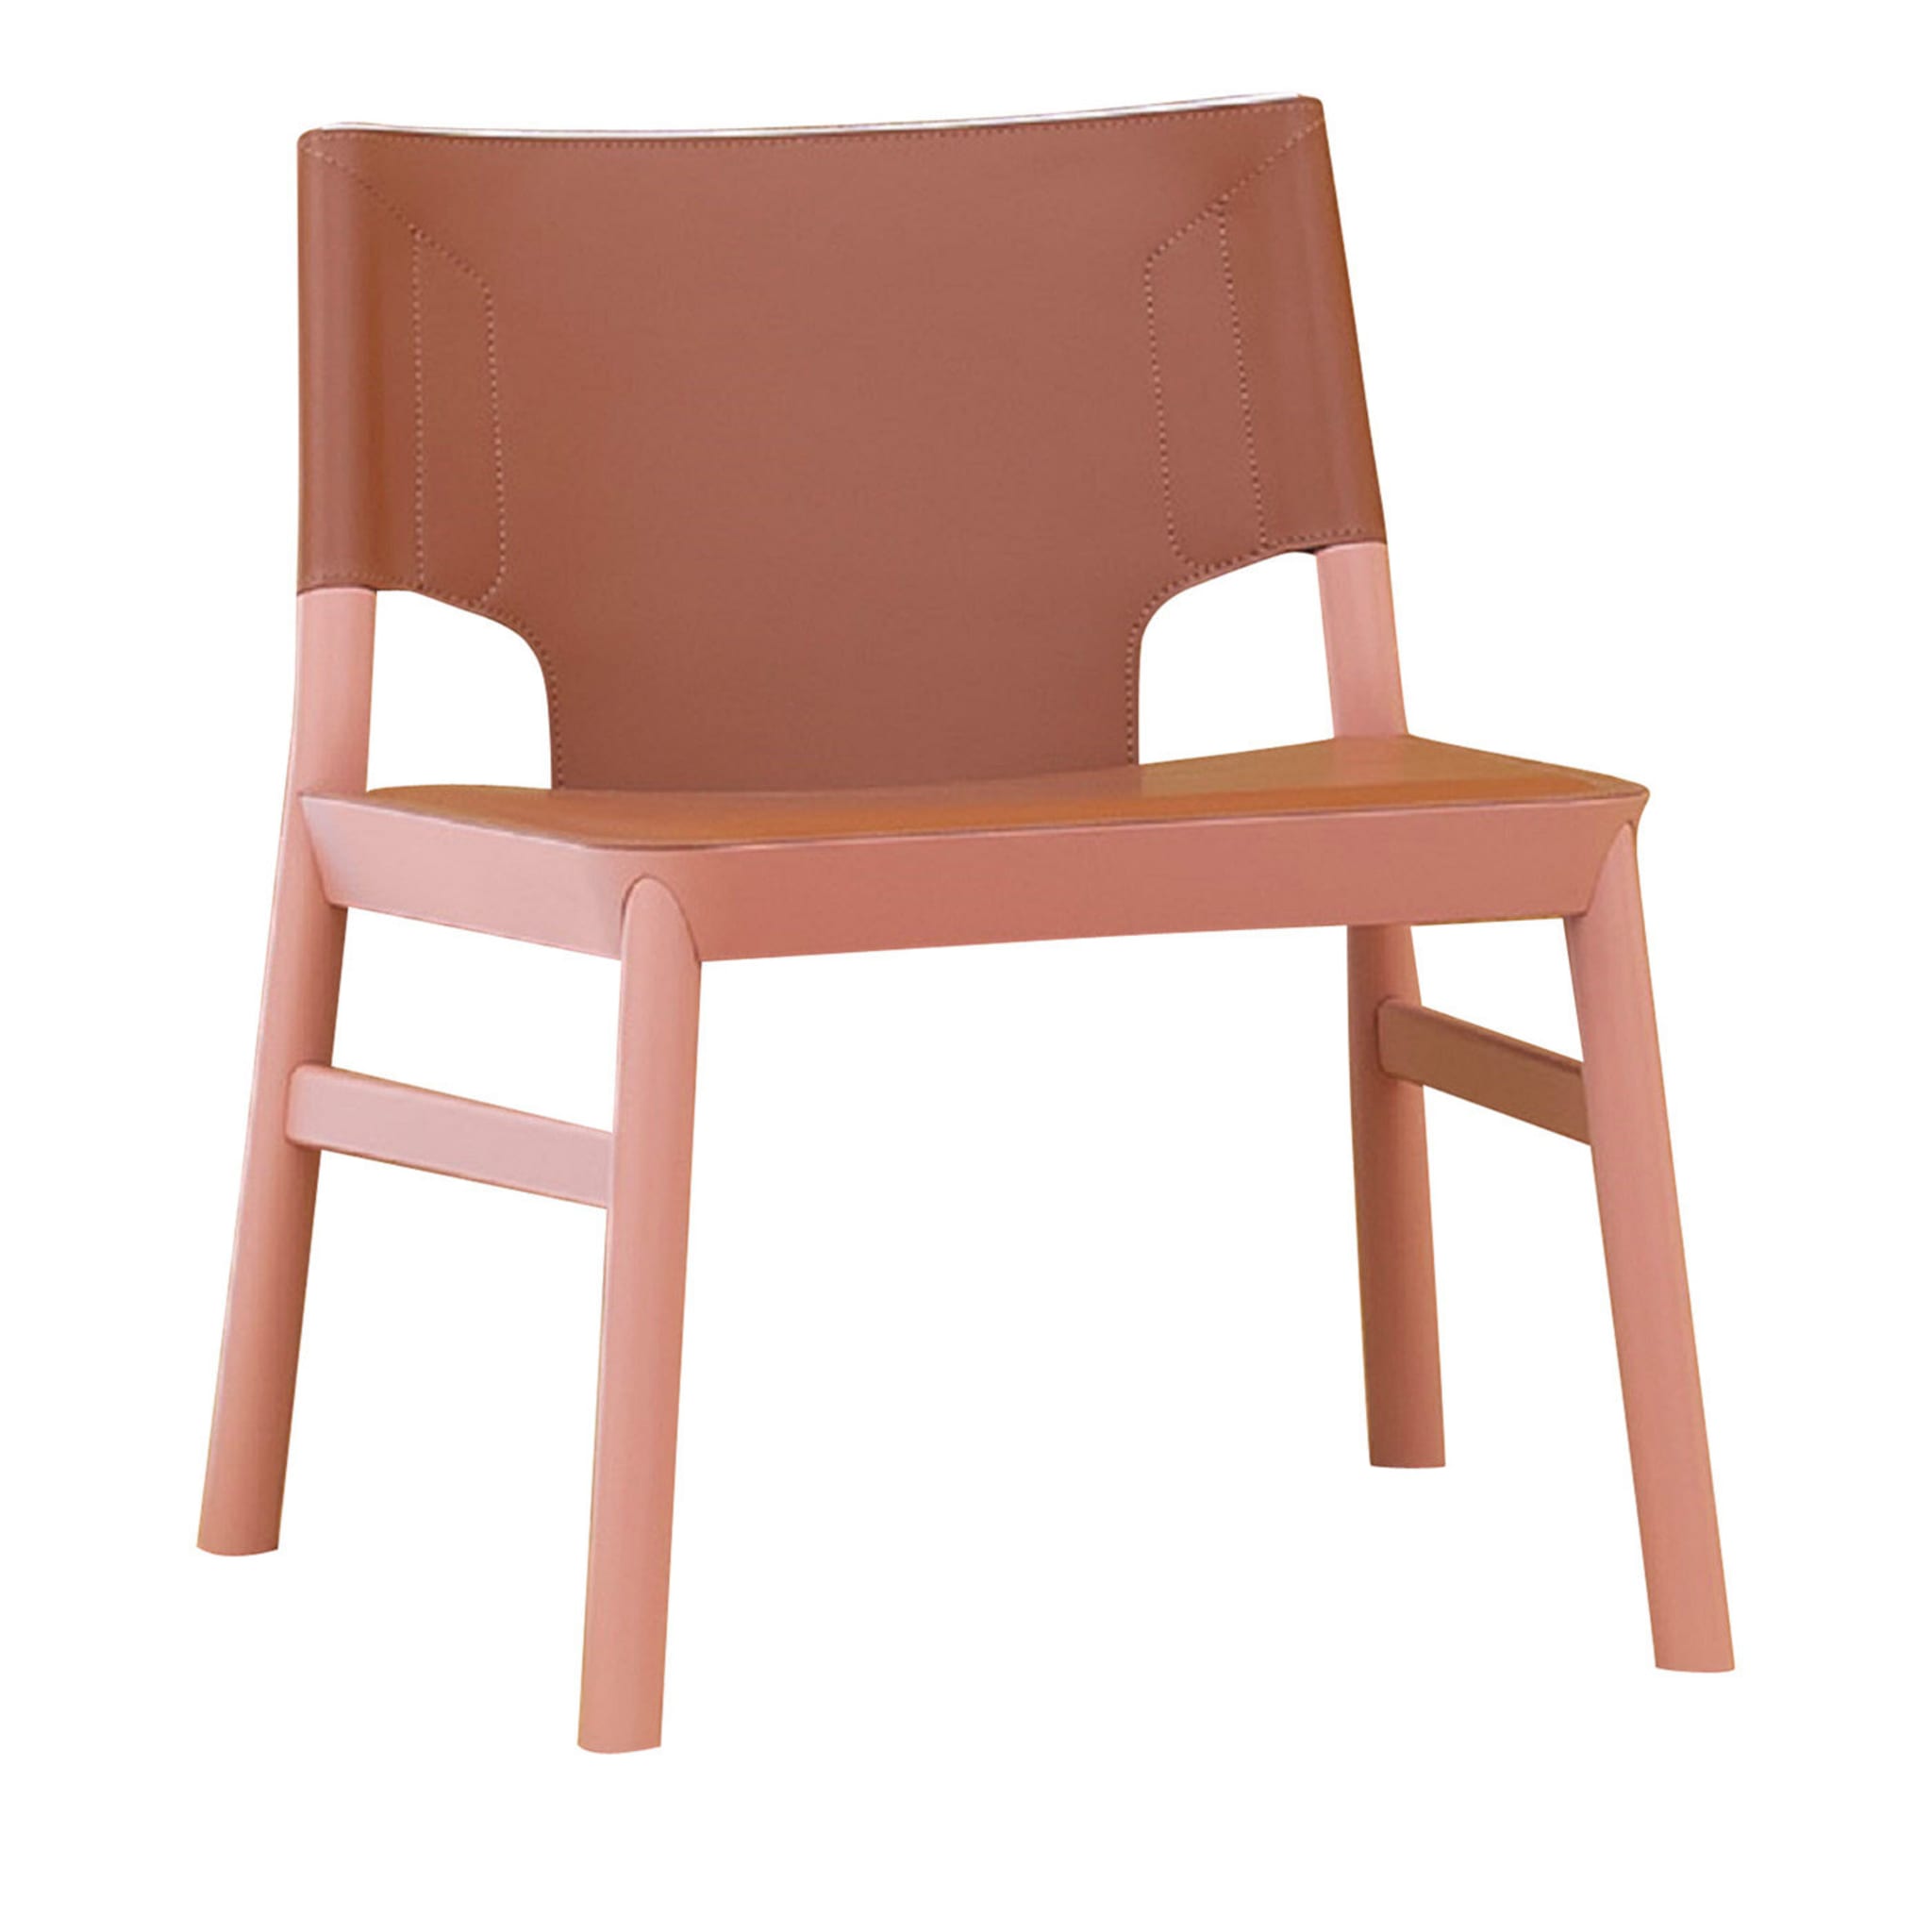 Marimba Lounge Chair by Emilio Nanni - Main view